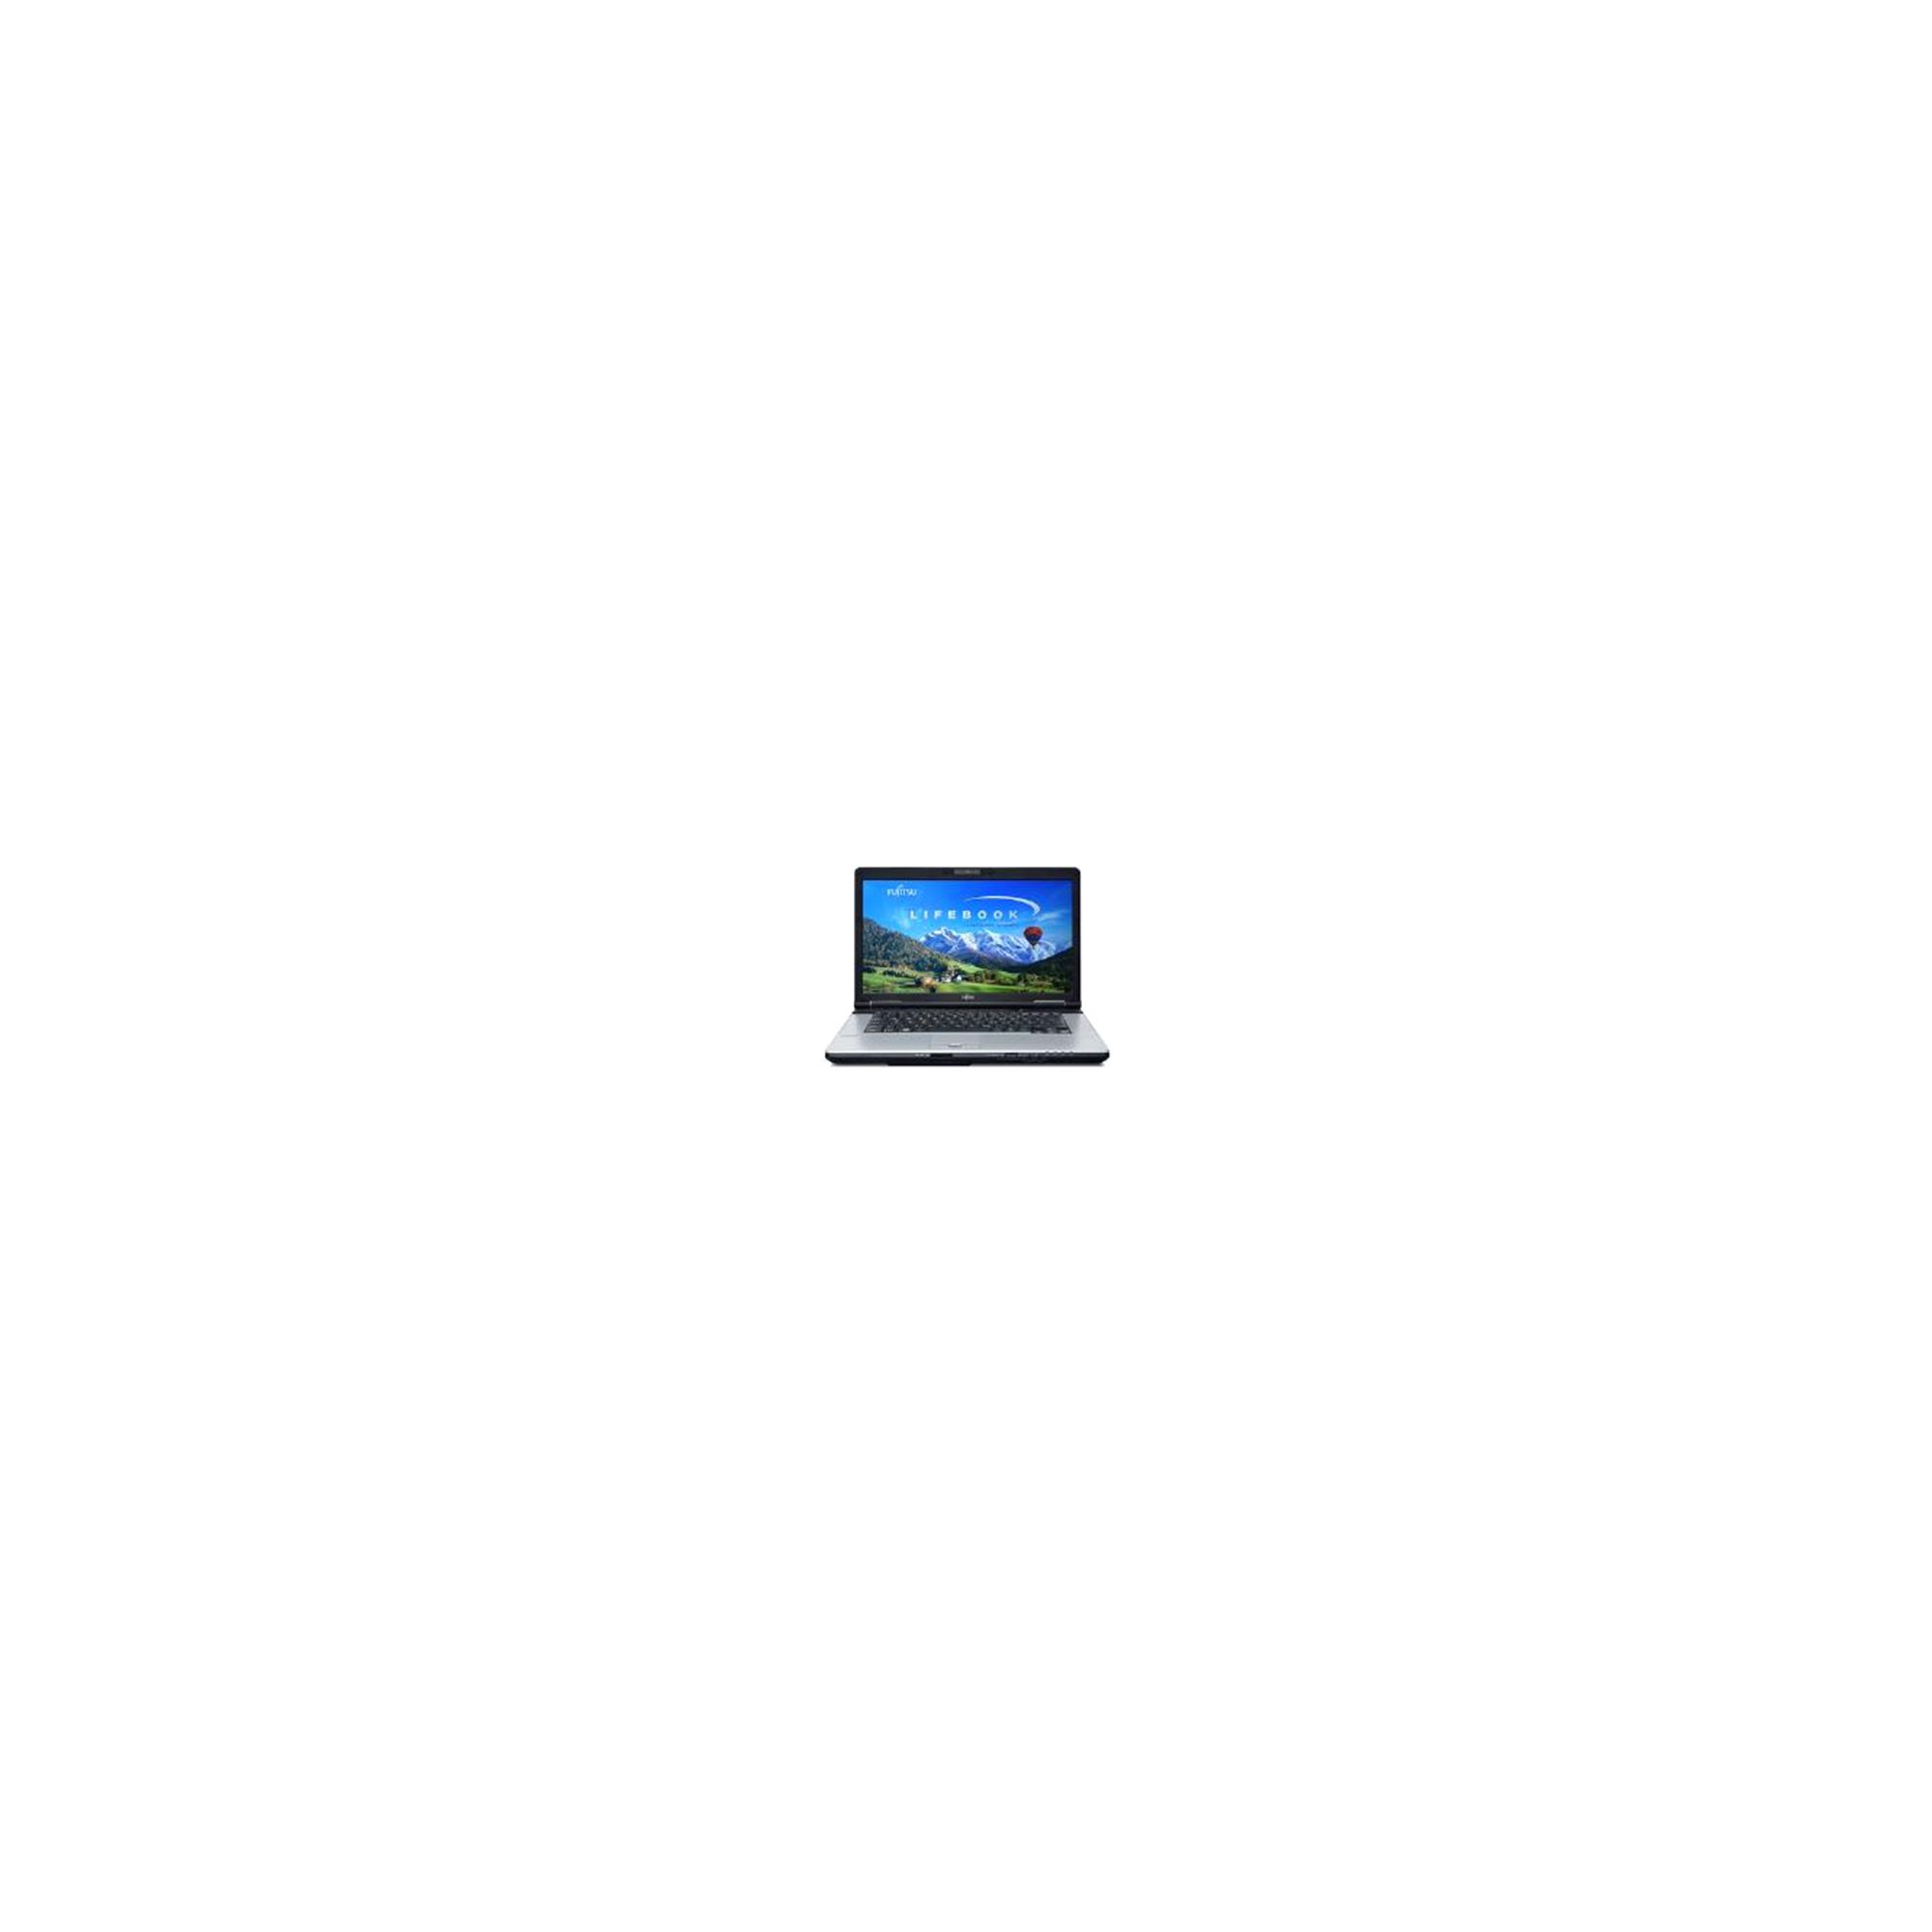 Fujitsu LIFEBOOK E752 (15.6 inch) Notebook Core i3 4GB 320GB DVD+RW Windows 7 Pro 64-bit at Tesco Direct